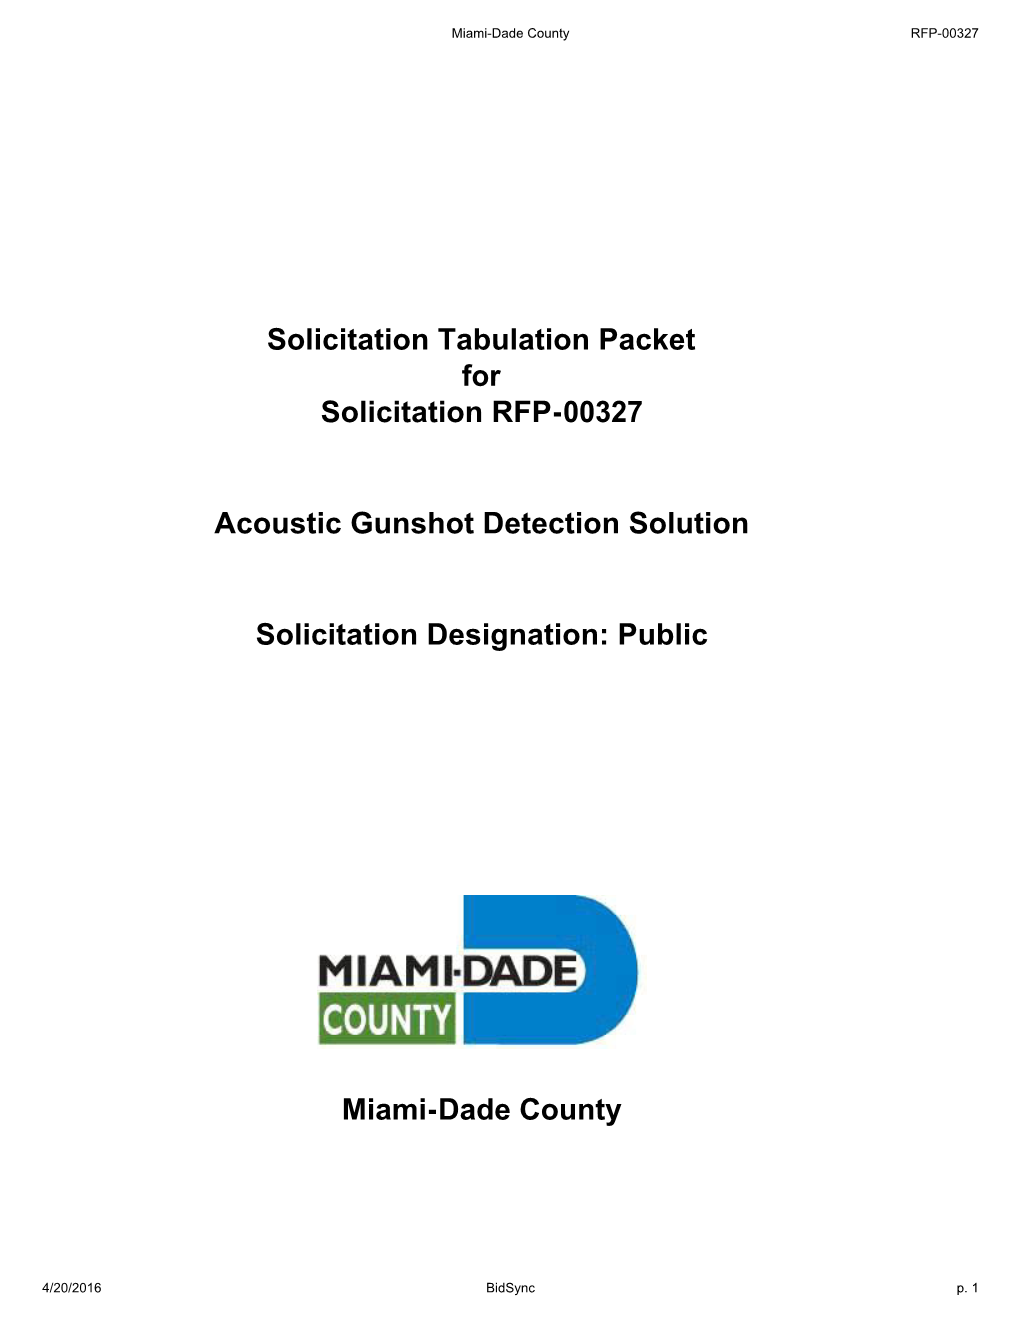 Solicitation Tabulation Packet for Solicitation RFP-00327 Acoustic Gunshot Detection Solution Solicitation Designation